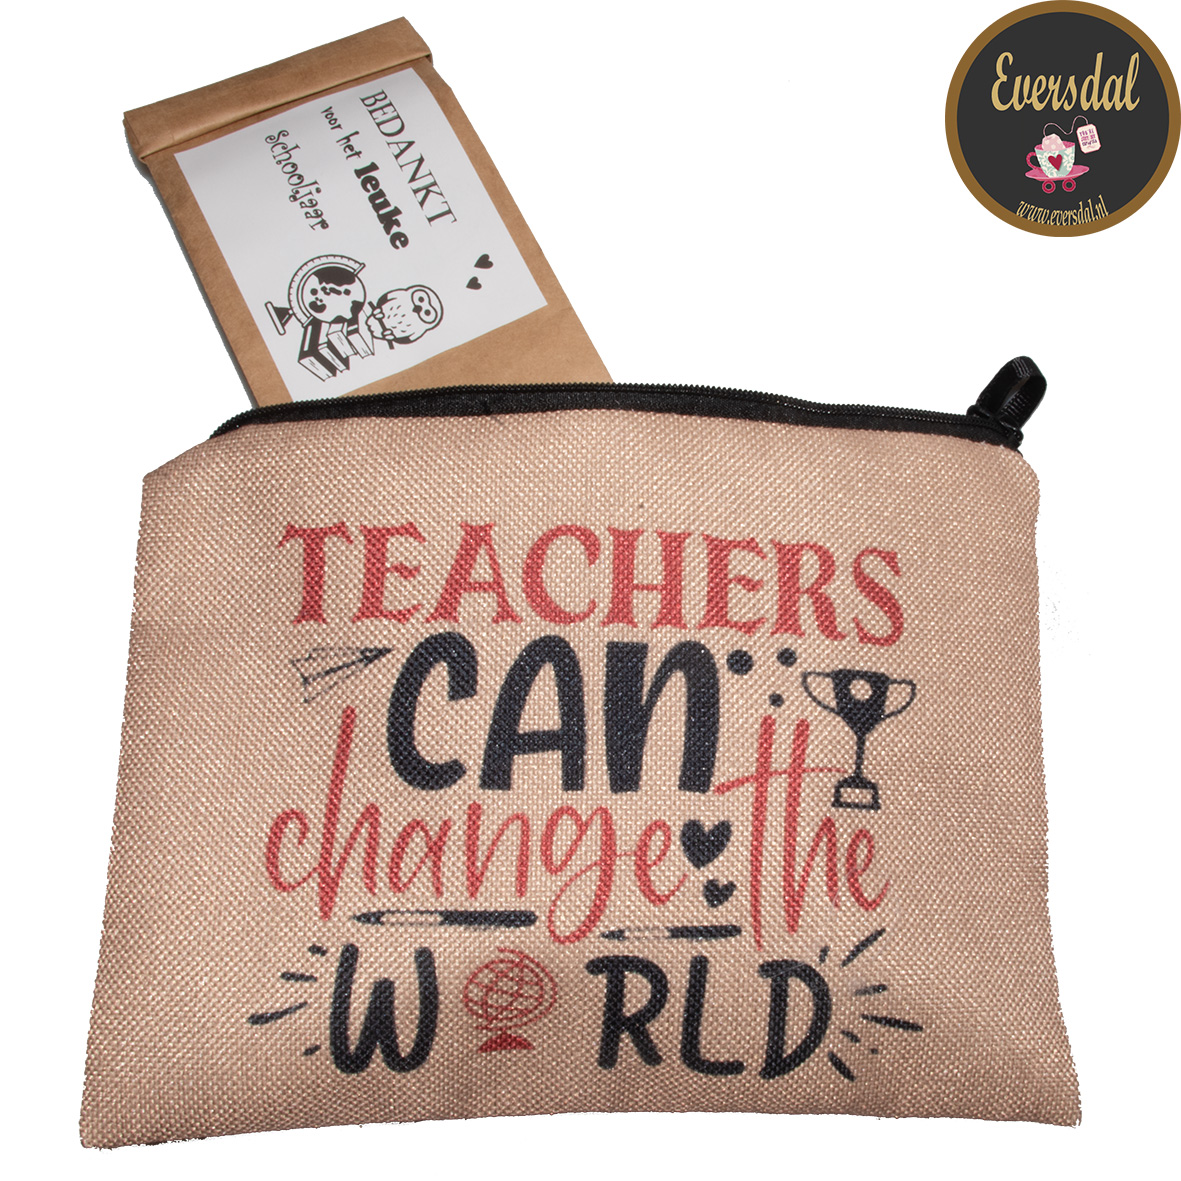 Teachers can change the world! - Nieuw